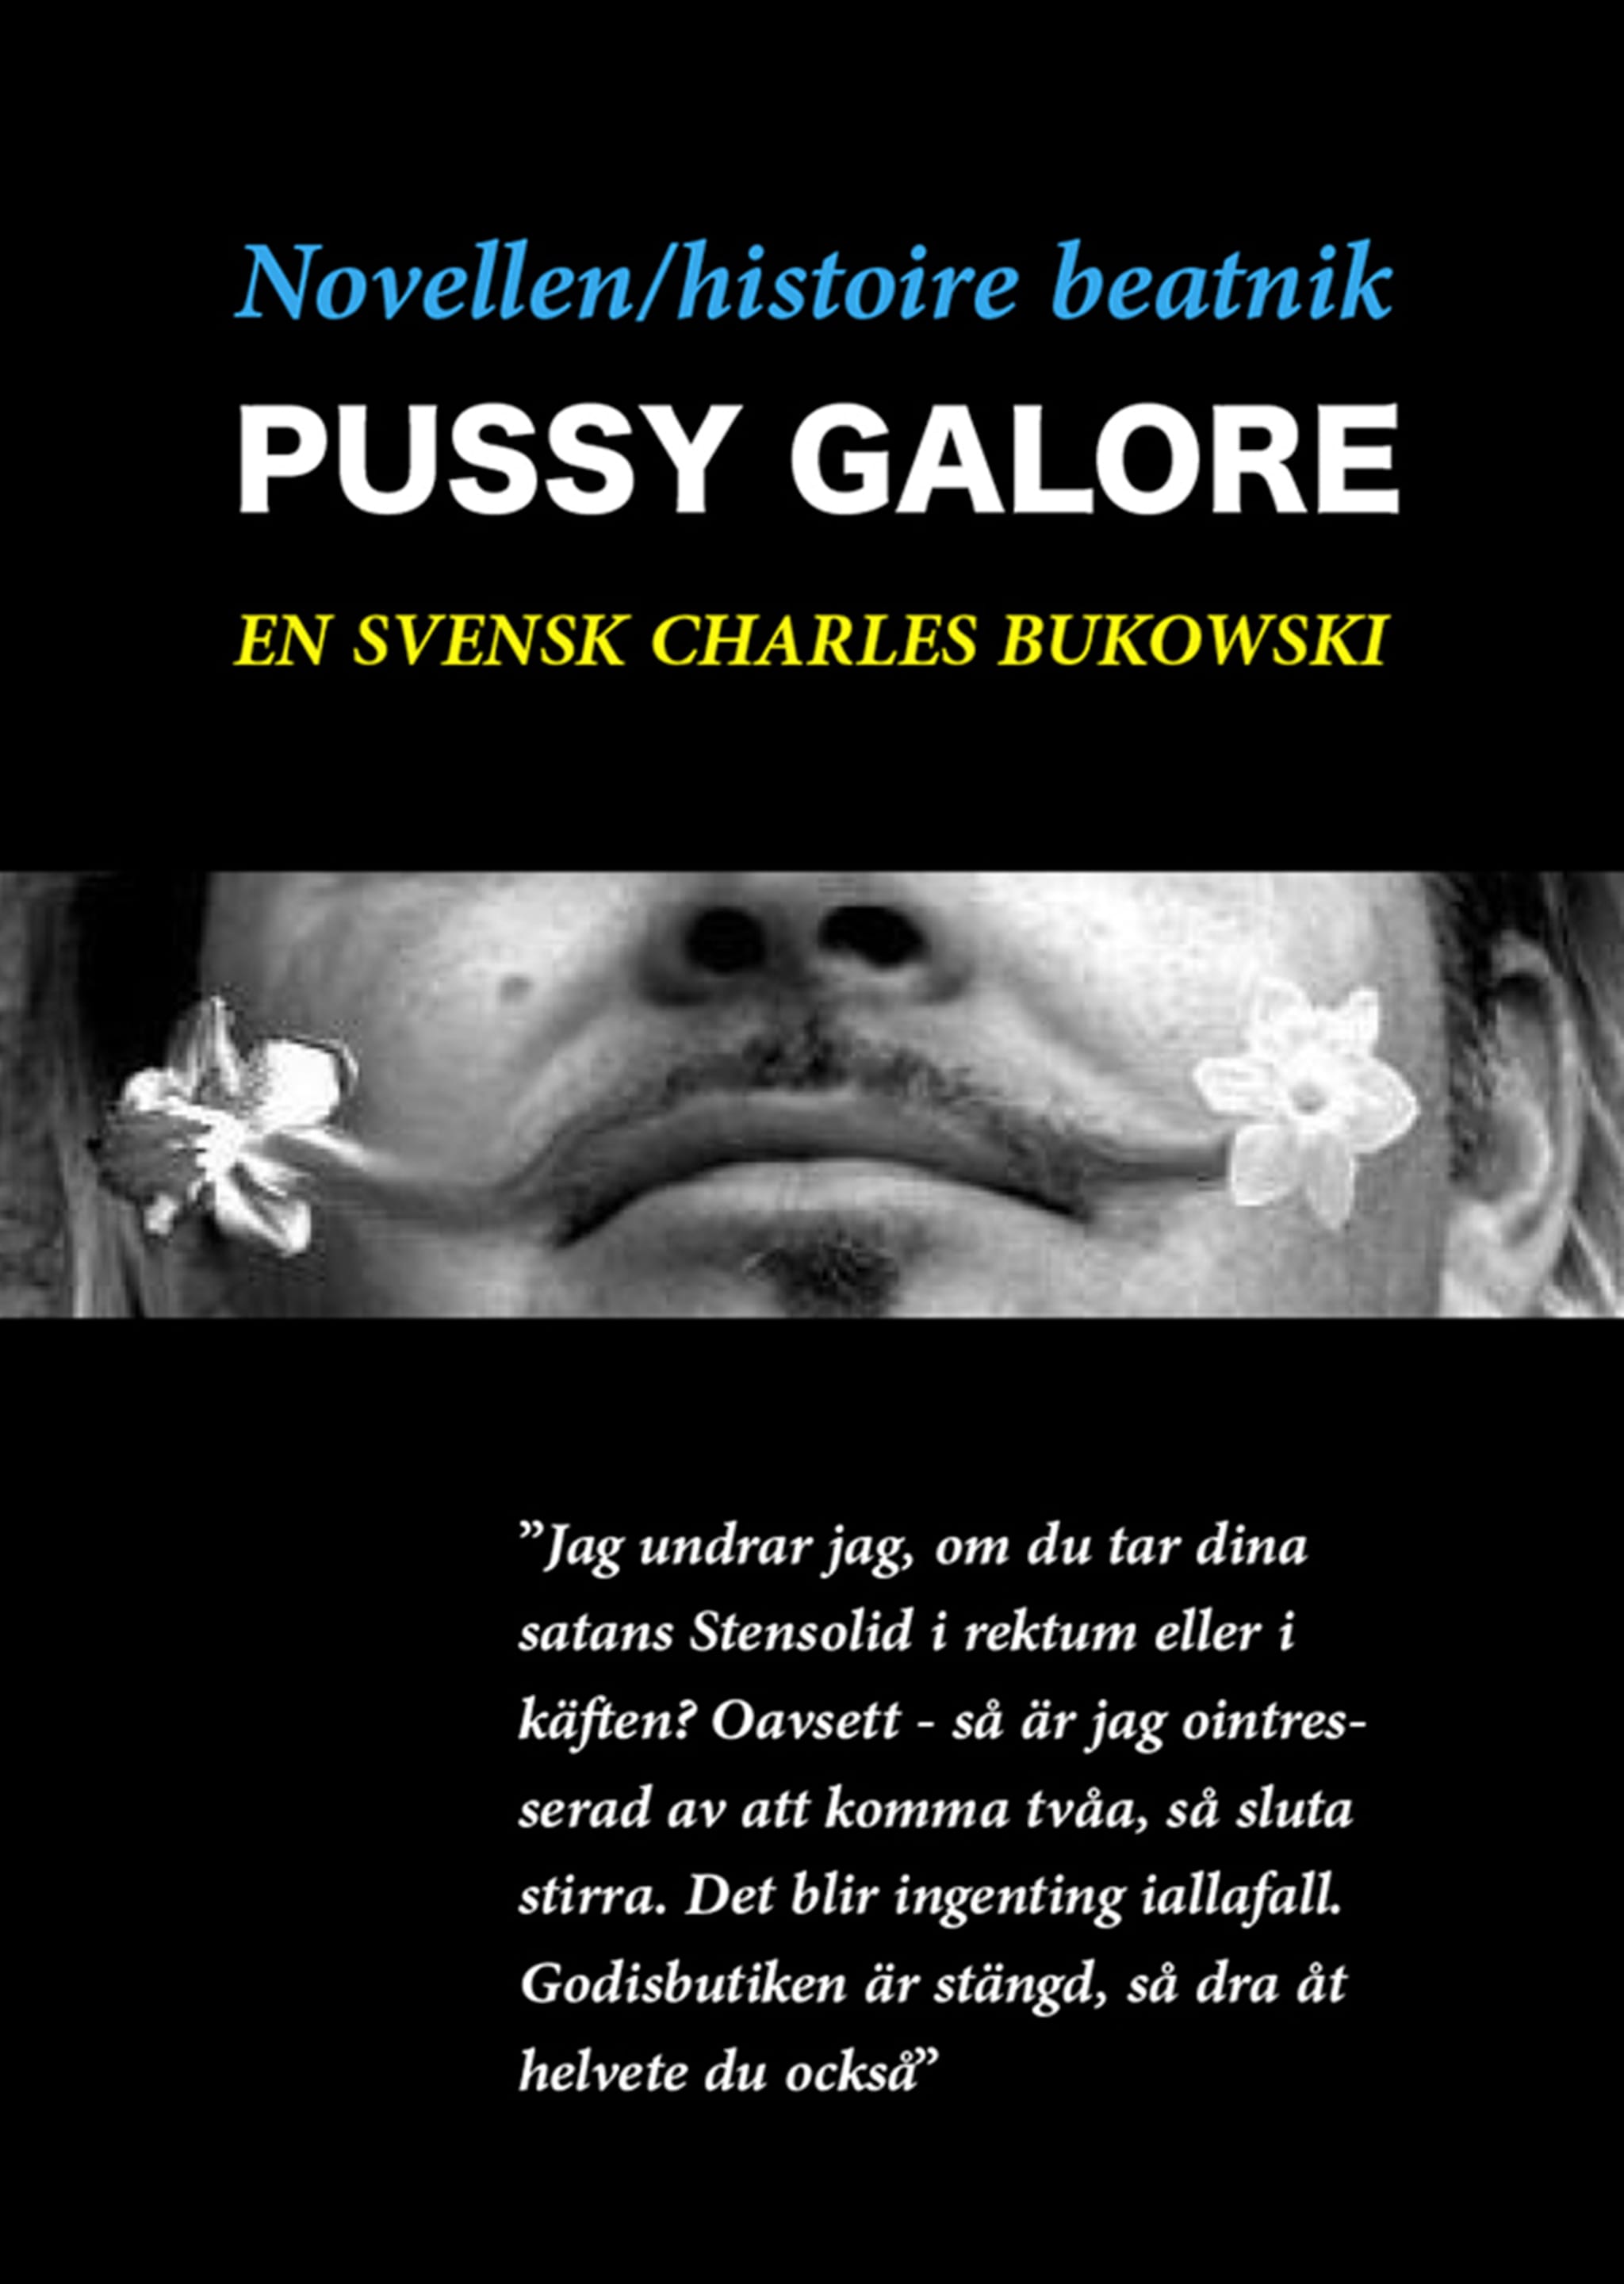 Novellen - histoire beatnik - Pussy Galore - en svensk Charles Bukowski